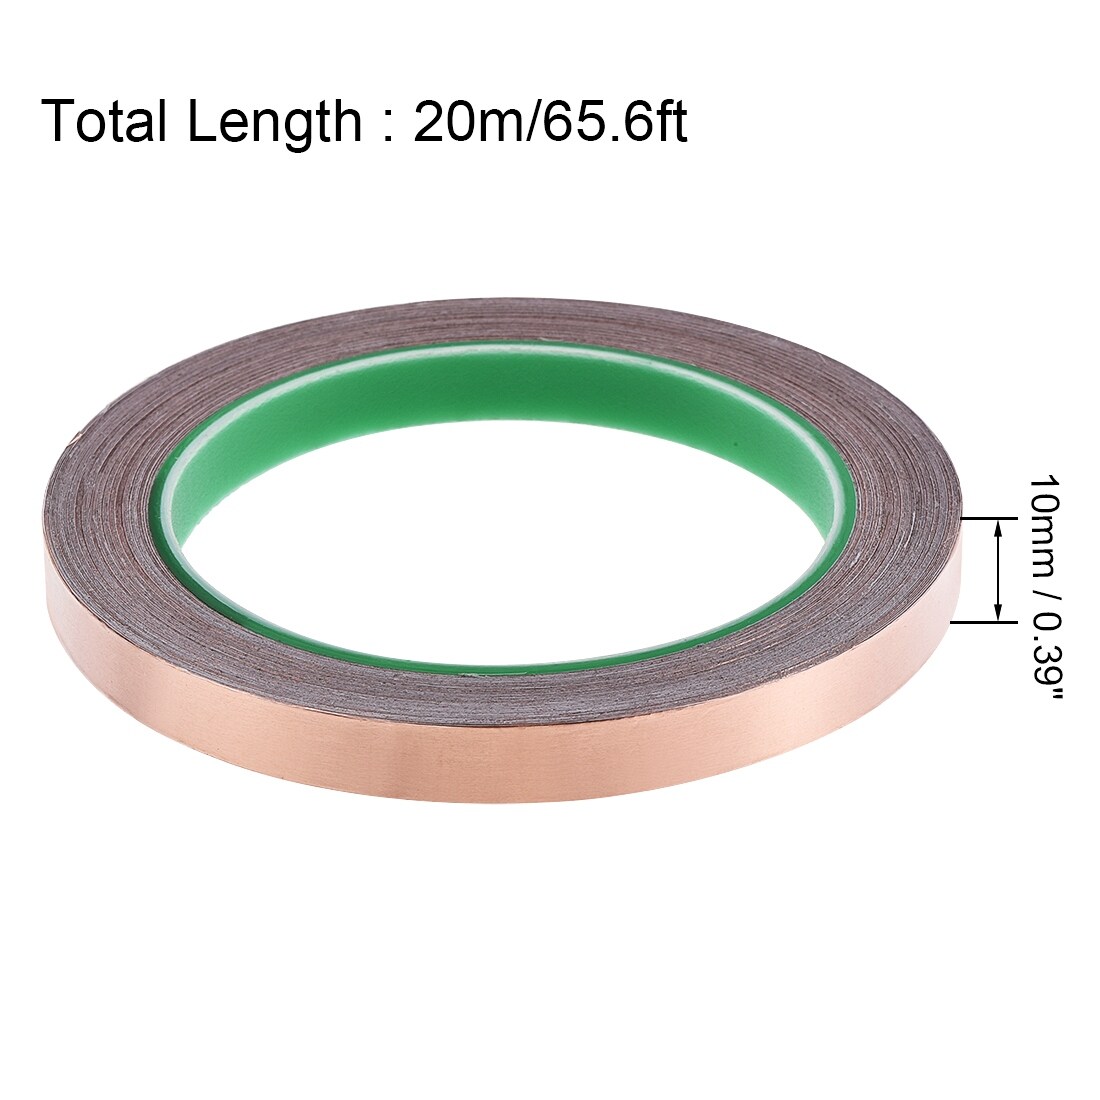 Double Sided Conductive Tape Copper Foil Tape 10mm x 20m for EMI Shielding  - Copper Tone - Bed Bath & Beyond - 37332755